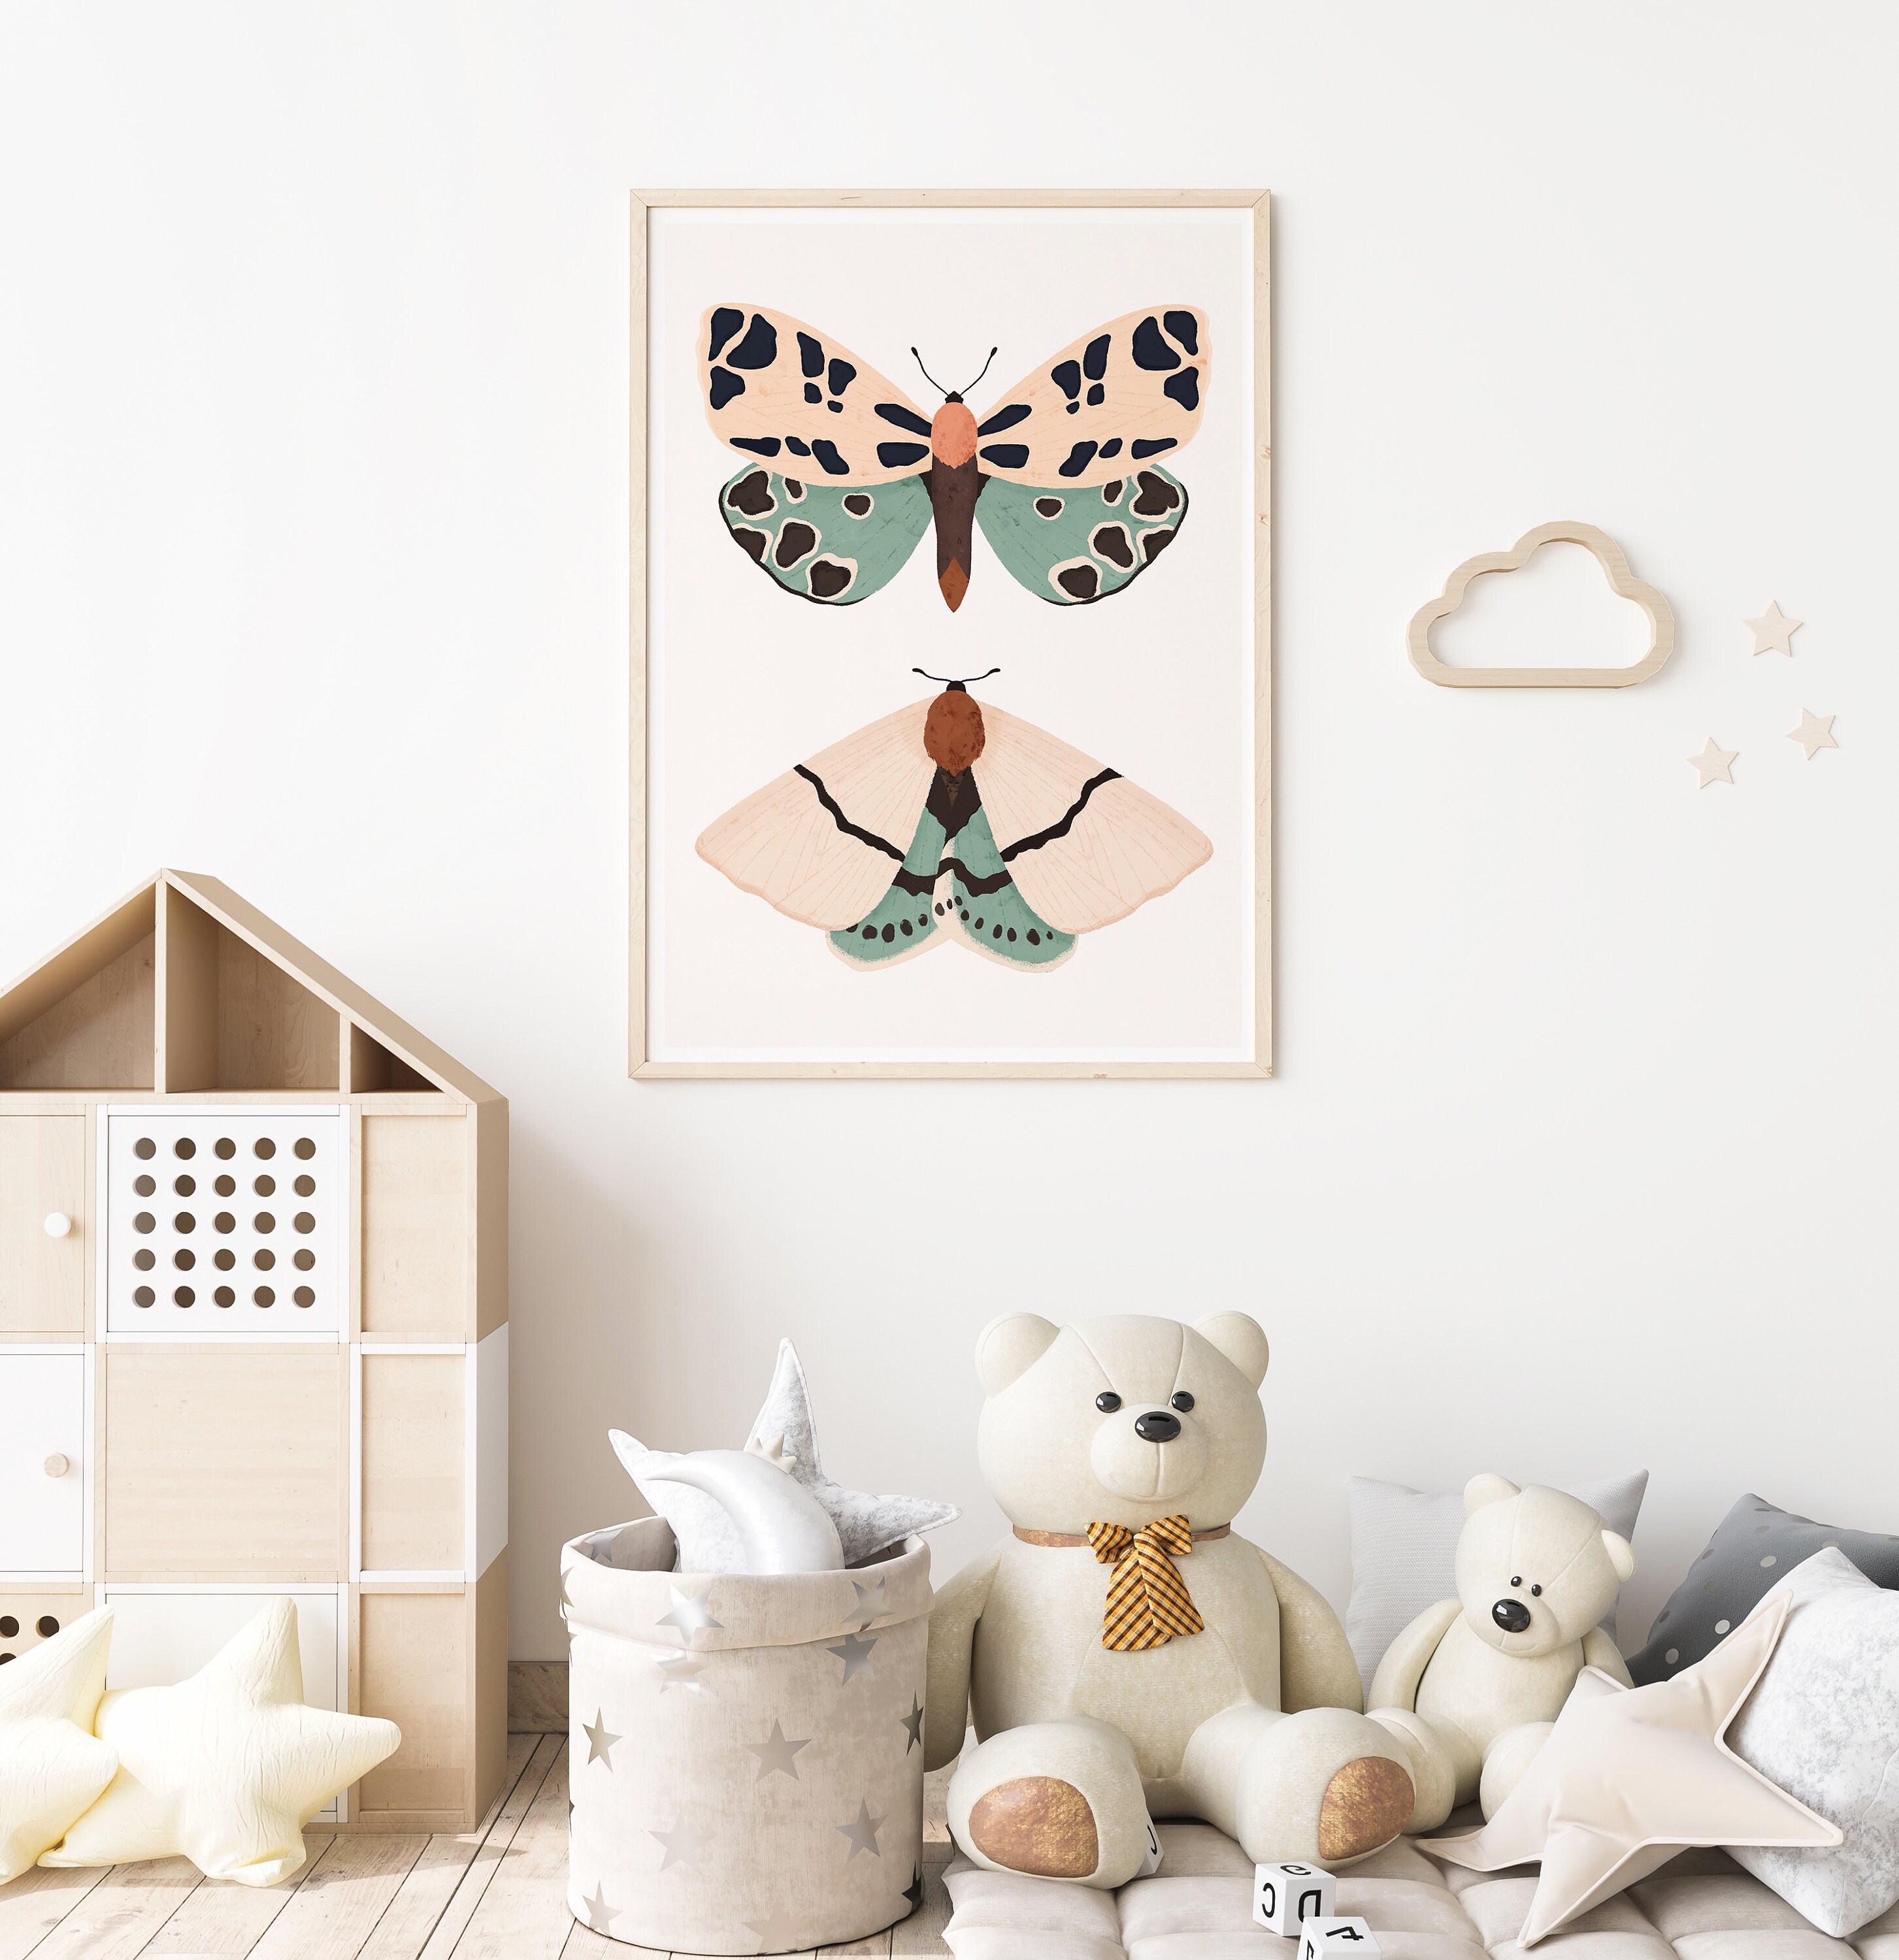 Butterfly Print, Butterfly Art, Watercolor Butterflies Painting